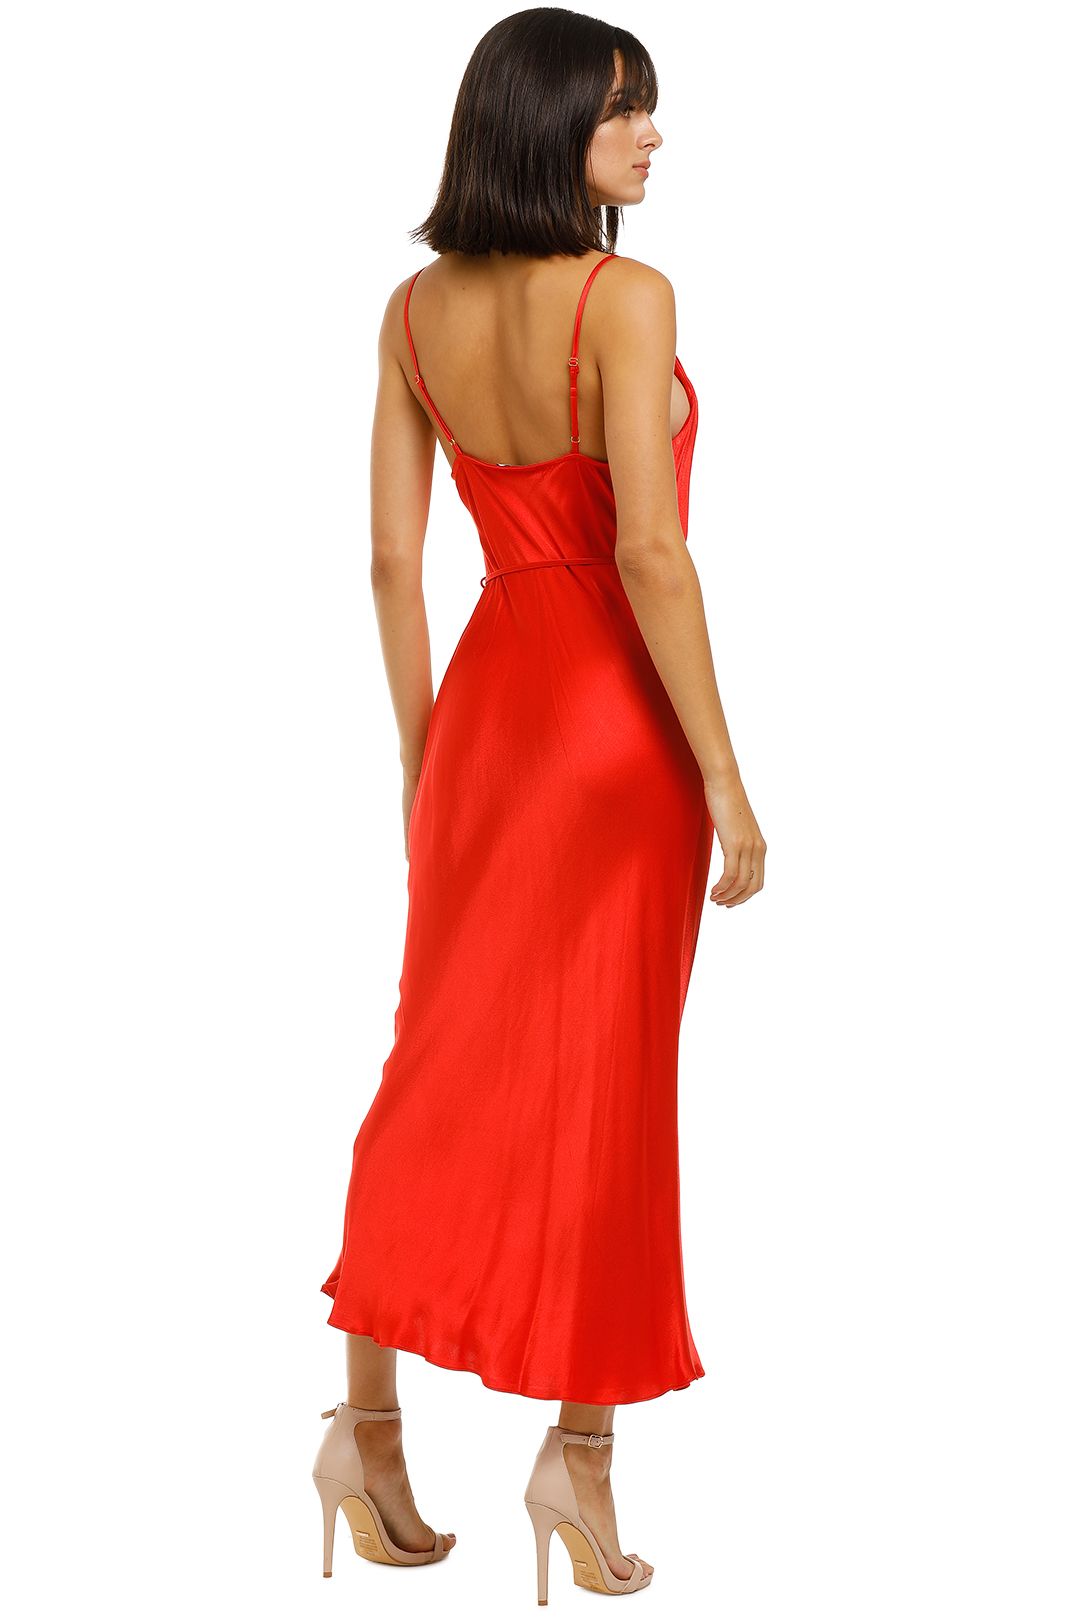 Shona-Joy-Bias-Slip-Dress-Red-Back